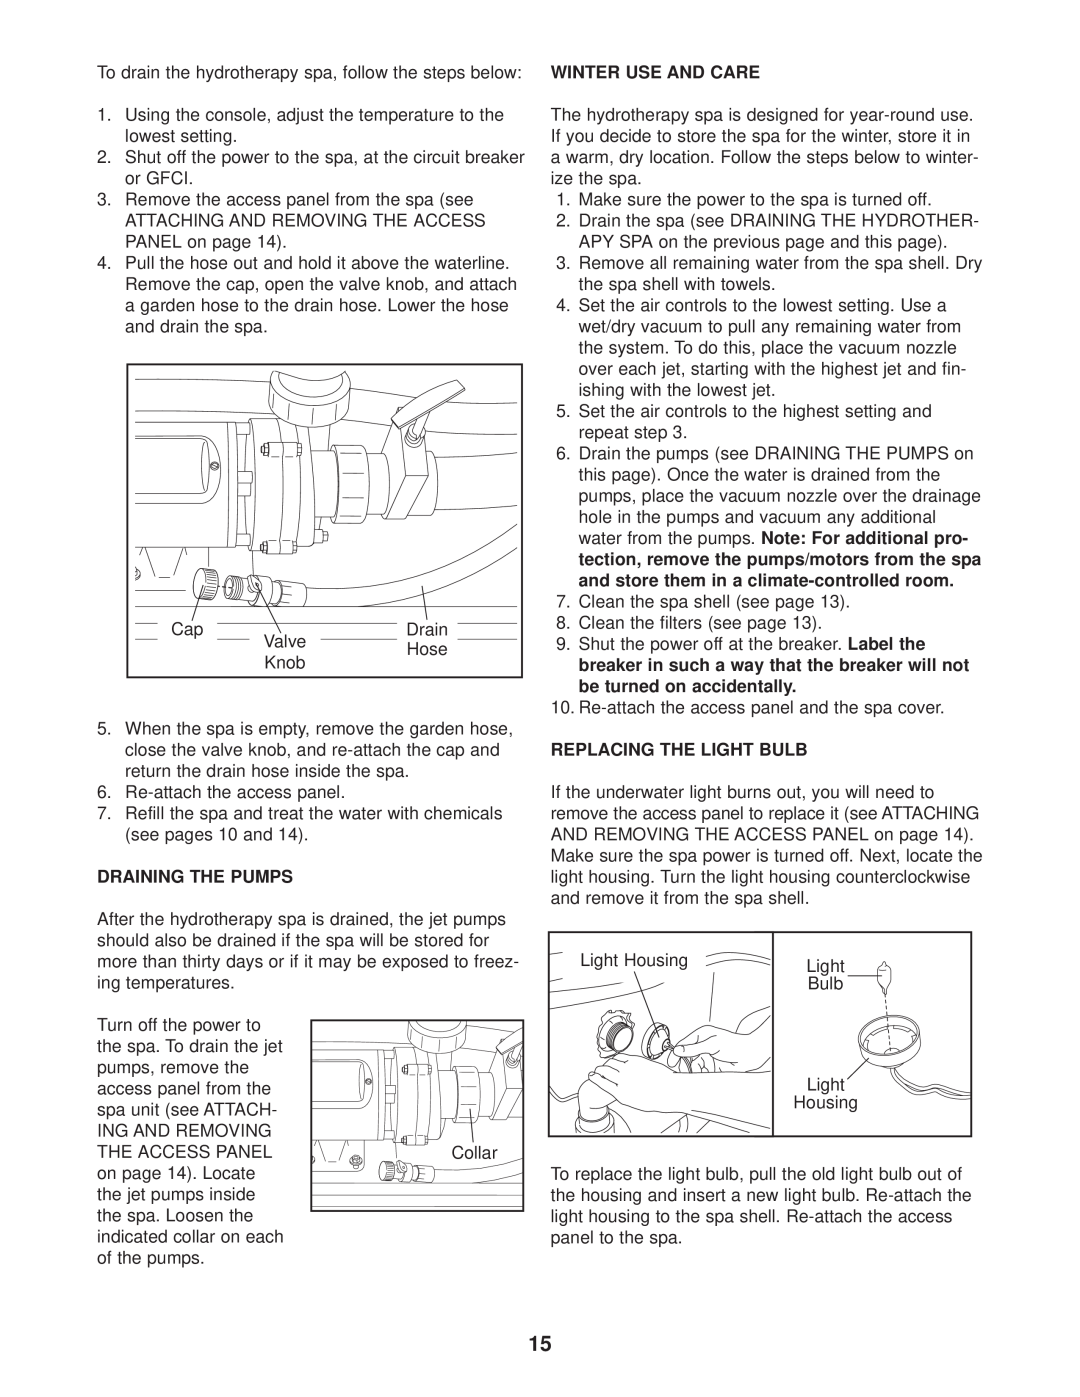 Image IMSB73911, IMSG73911 user manual Draining The Pumps, Replacing The Light Bulb 